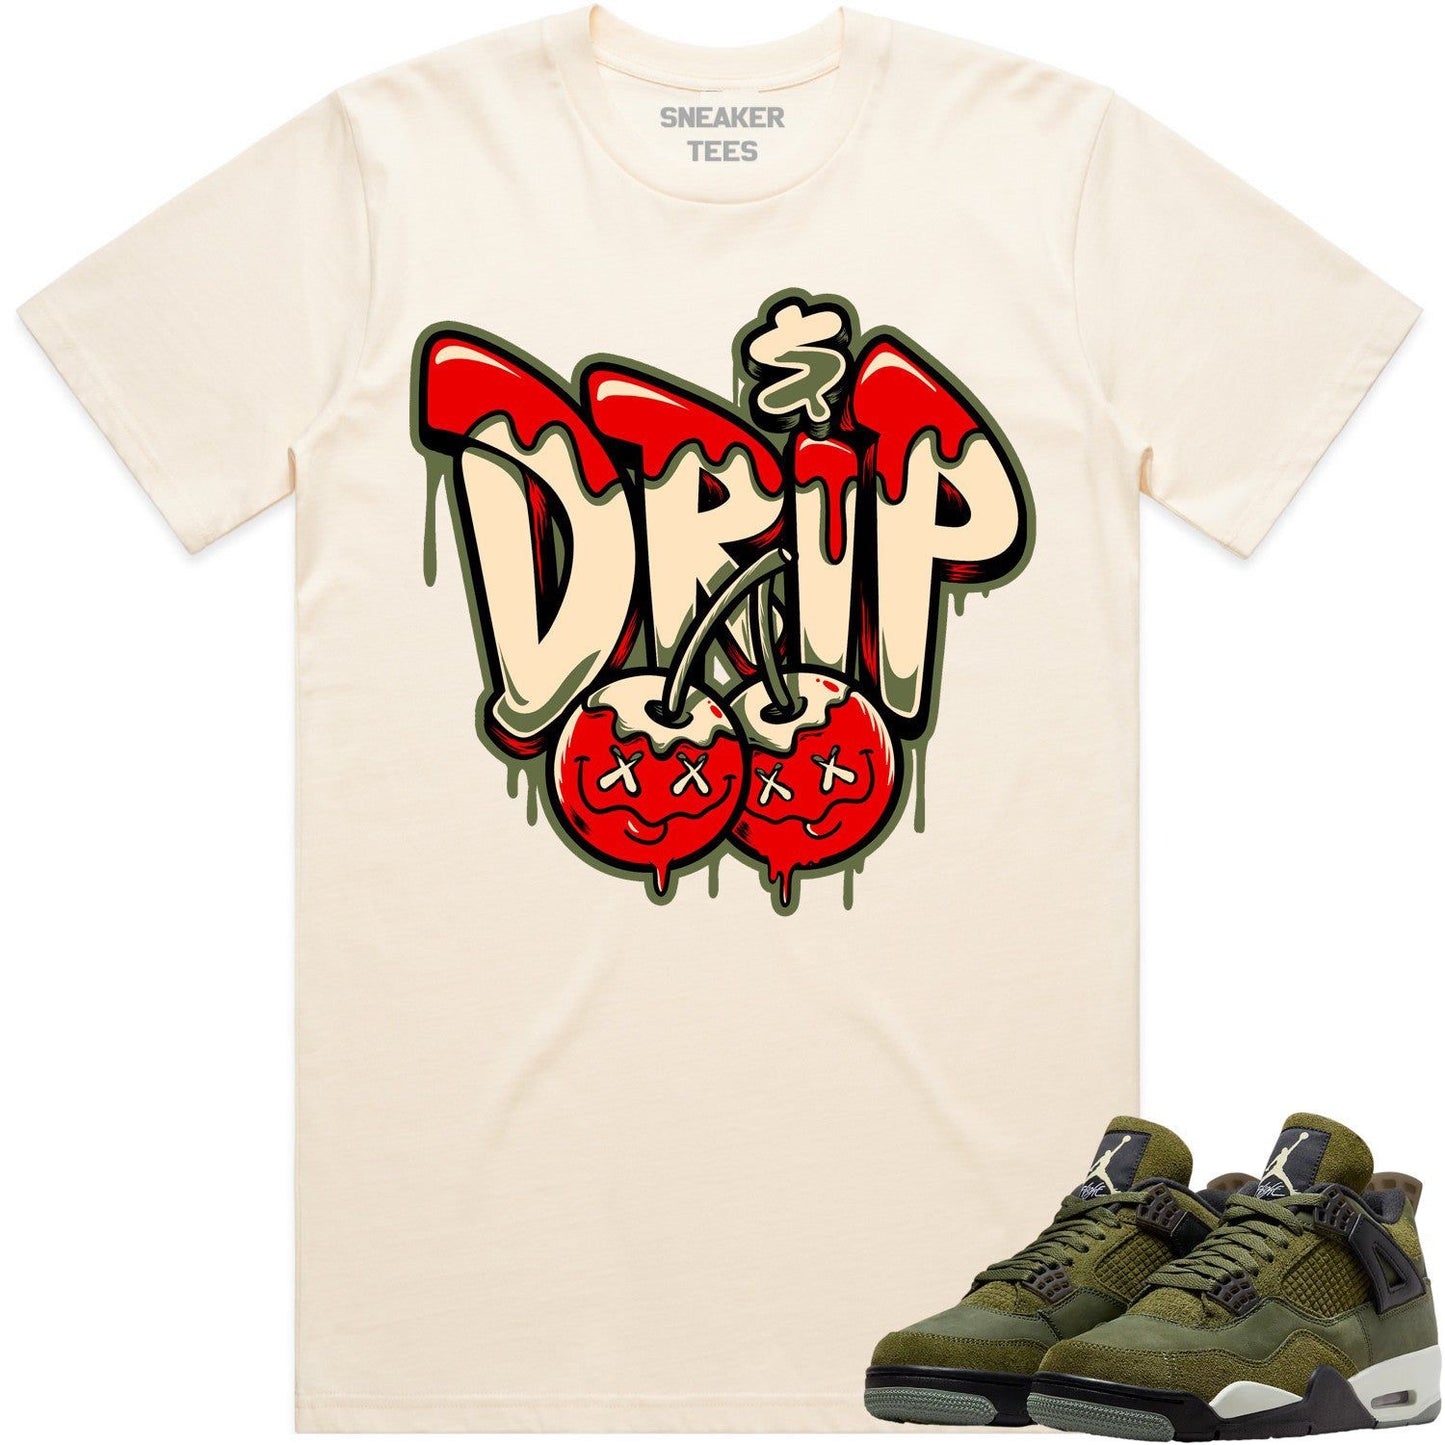 Craft Olive 4s Shirt - Jordan 4 Olive 4s Shirts - Money Drip